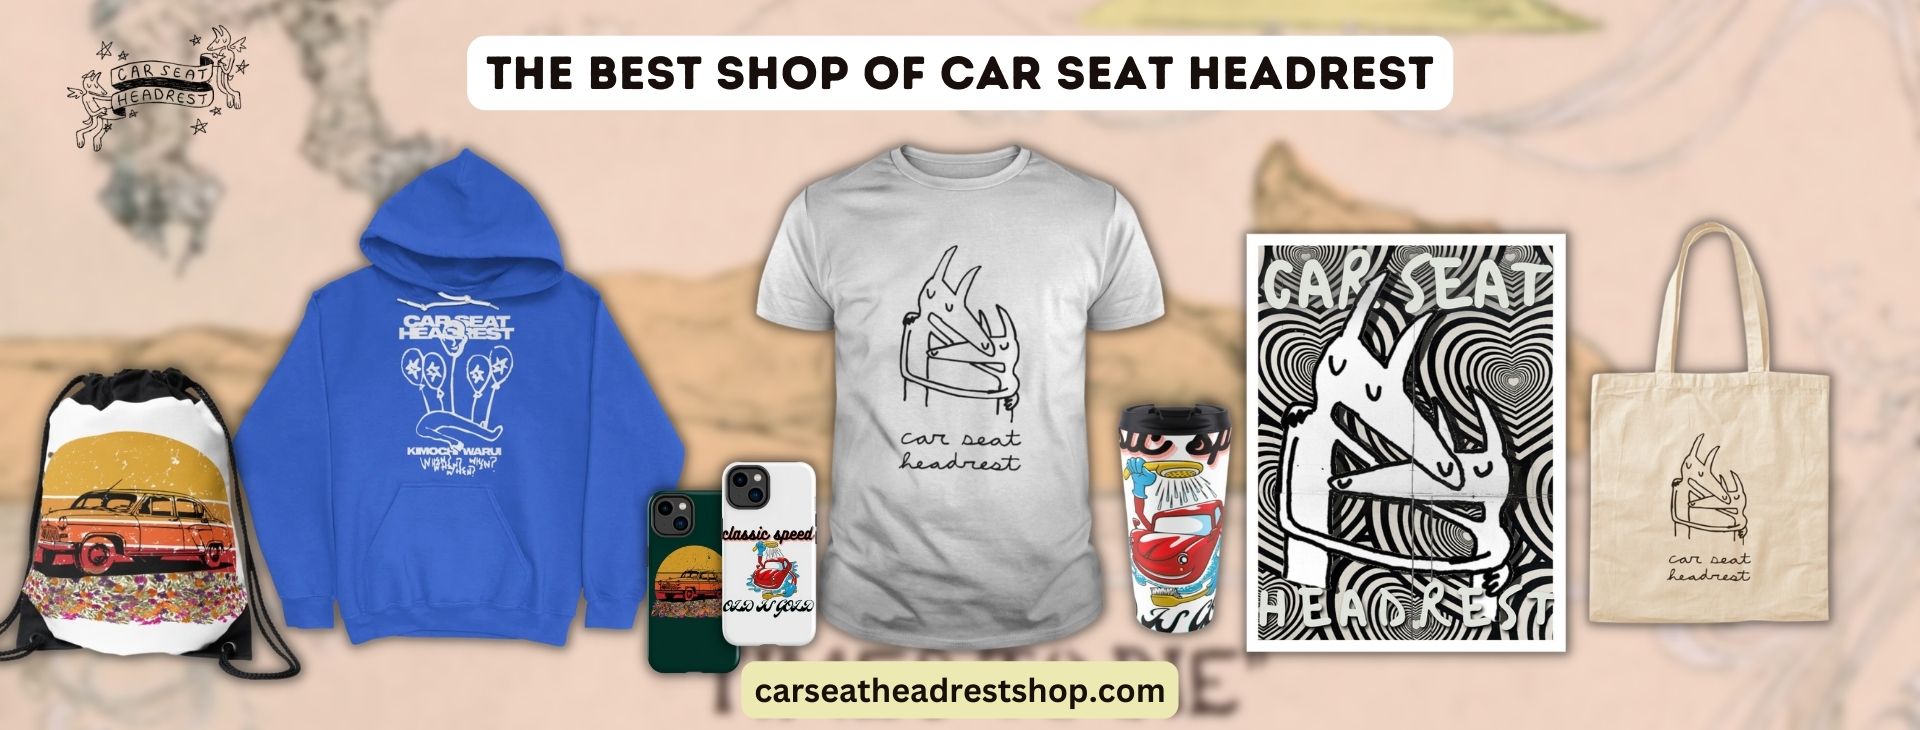 Car Seat Headrest Banner 1920x730px 1 - Car Seat Headrest Shop